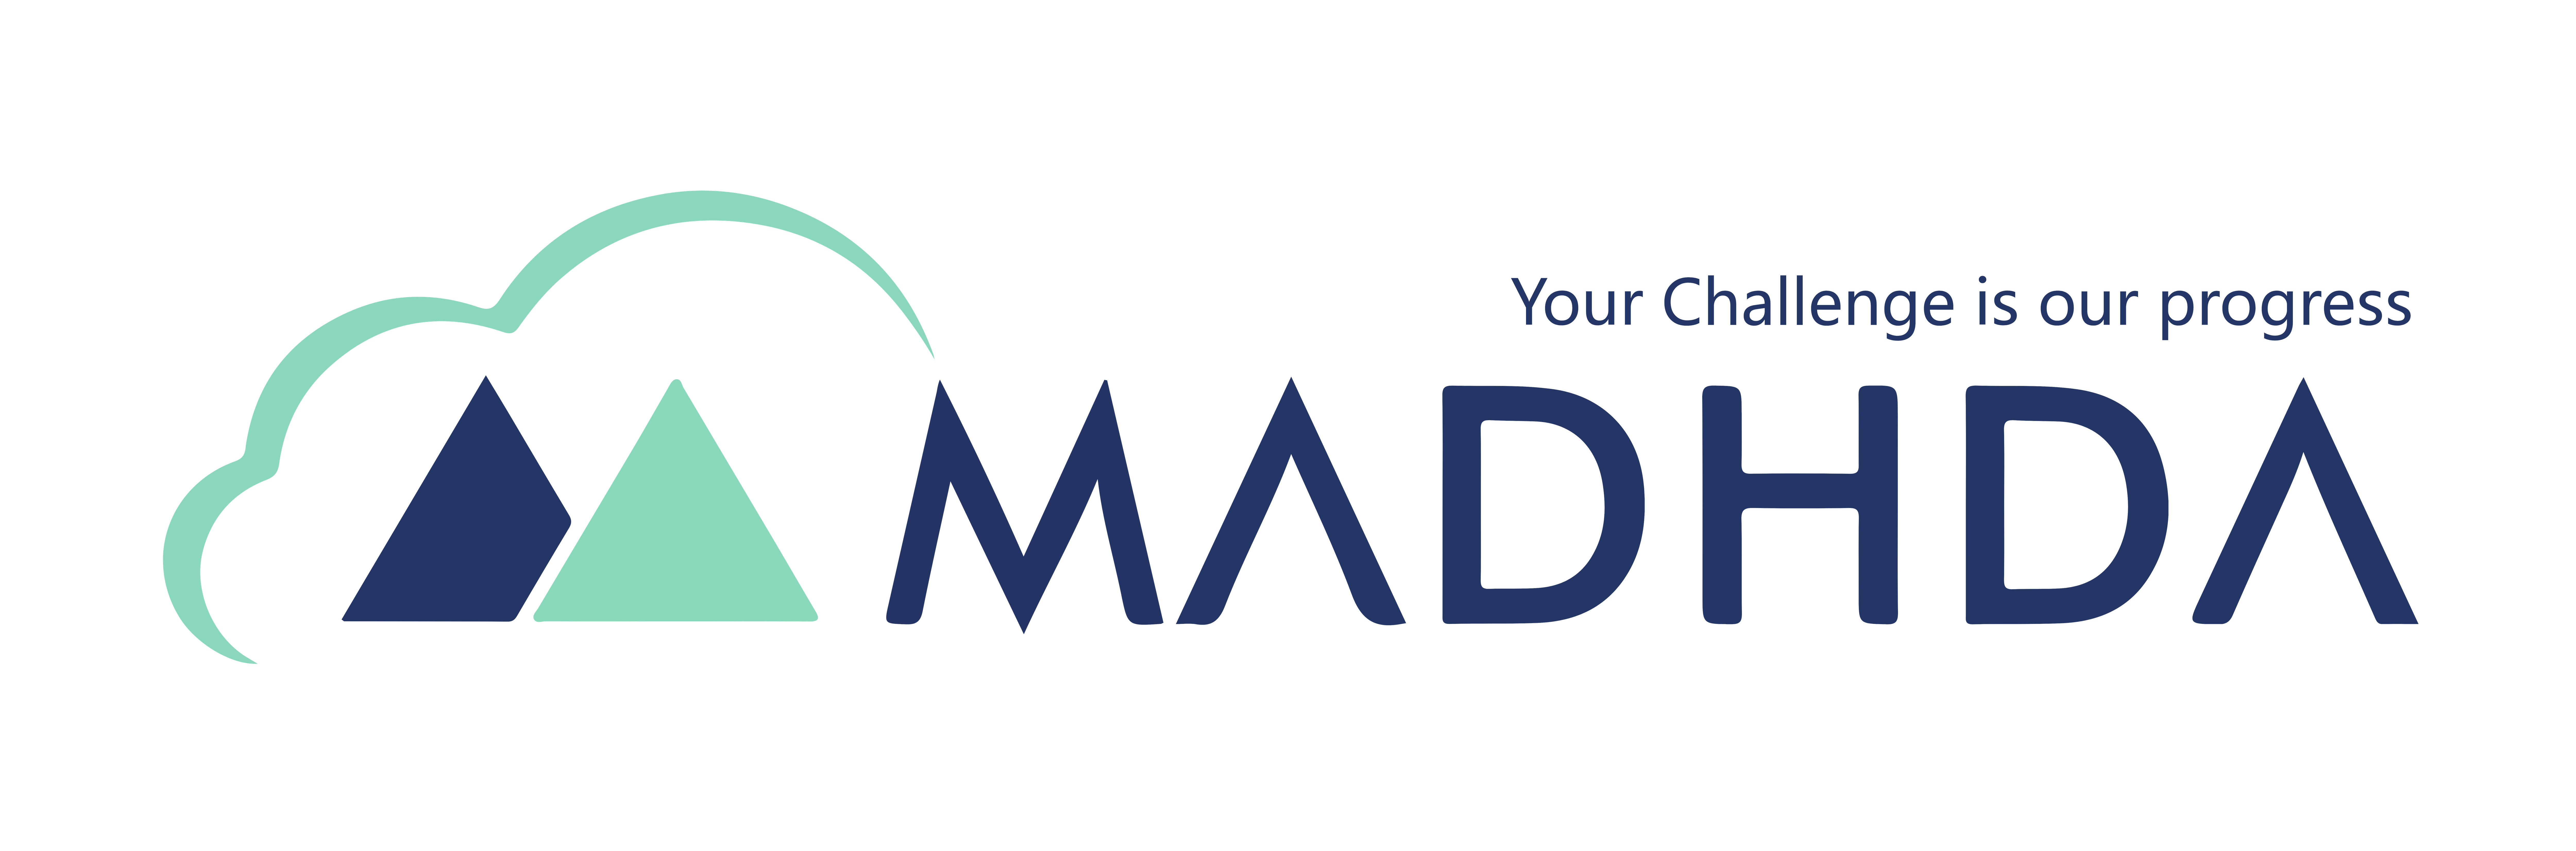 Madhda Logo Clean